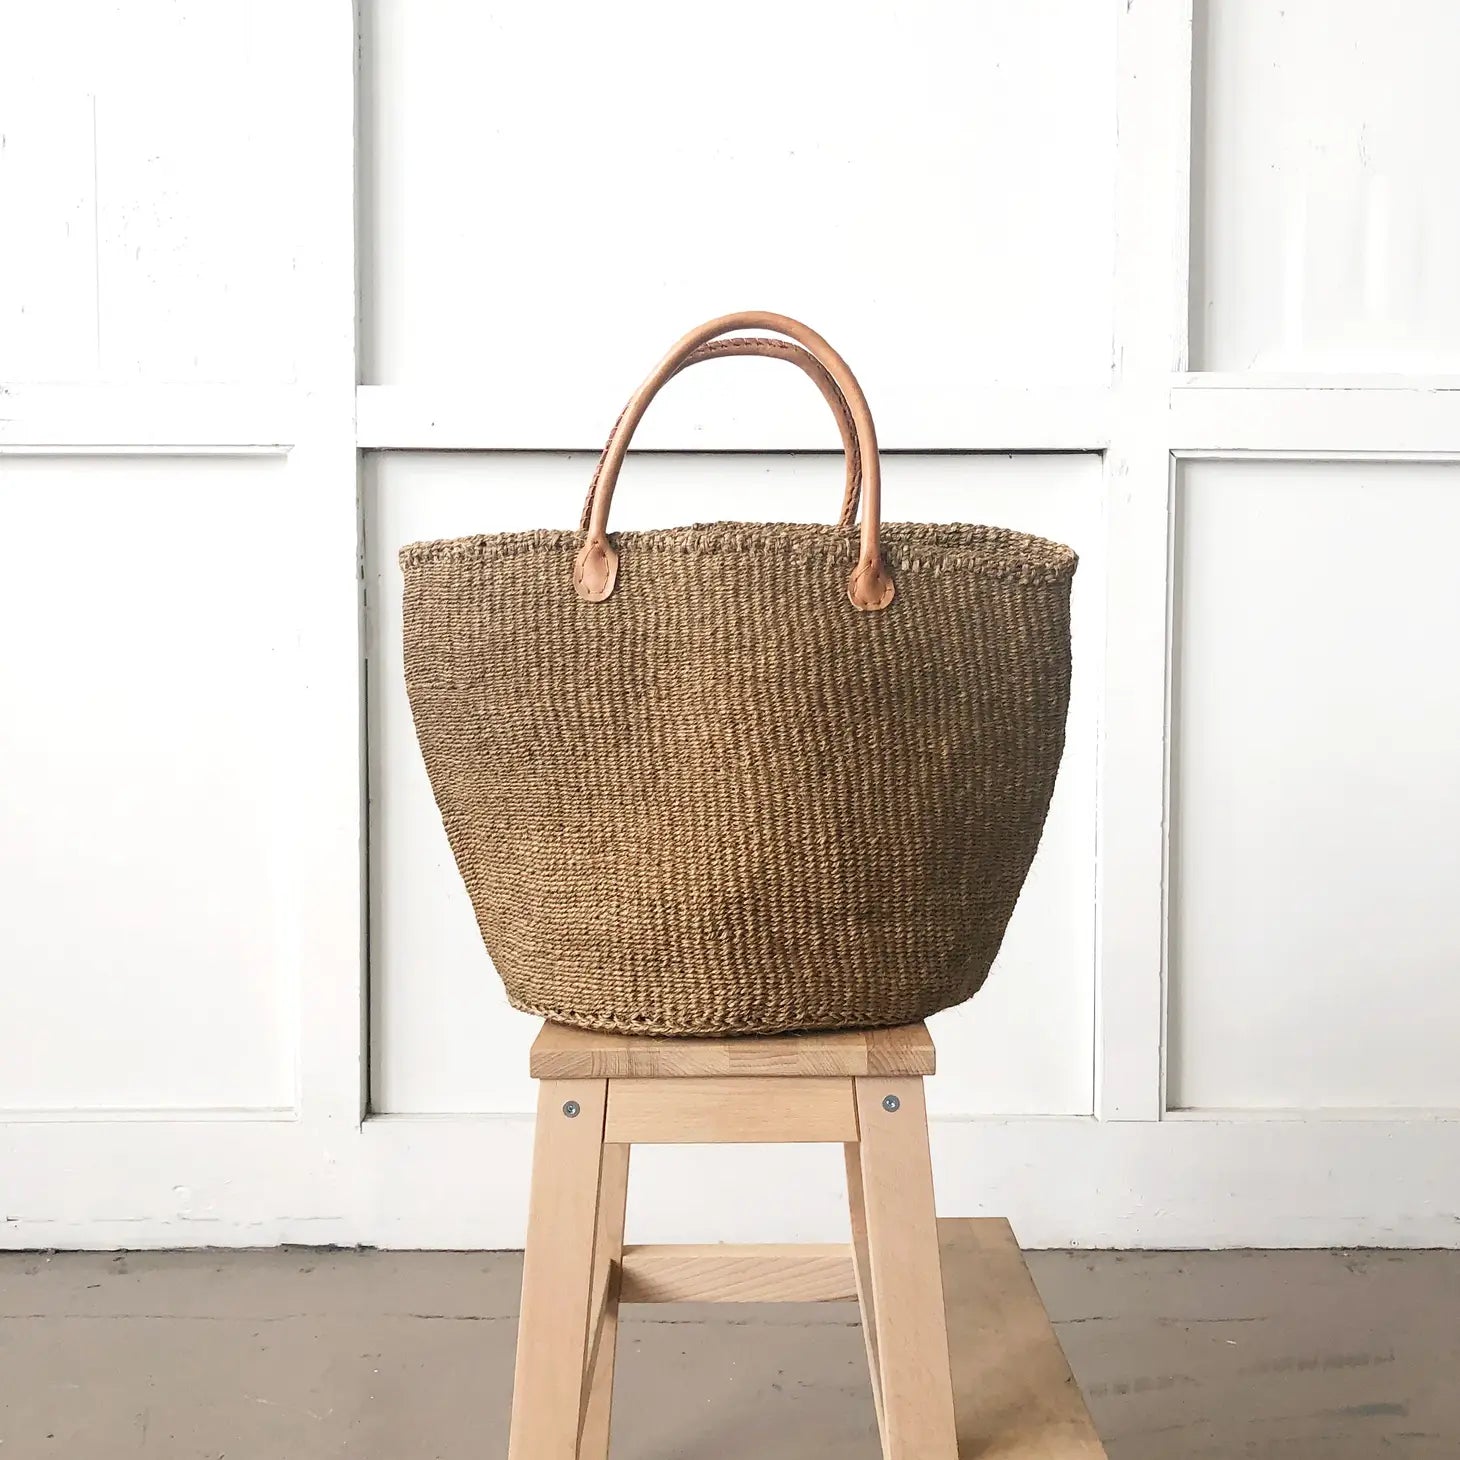 Woven Sisal bag, Market basket, African basket, Woven bag handmade fabric -  Africabaie.com